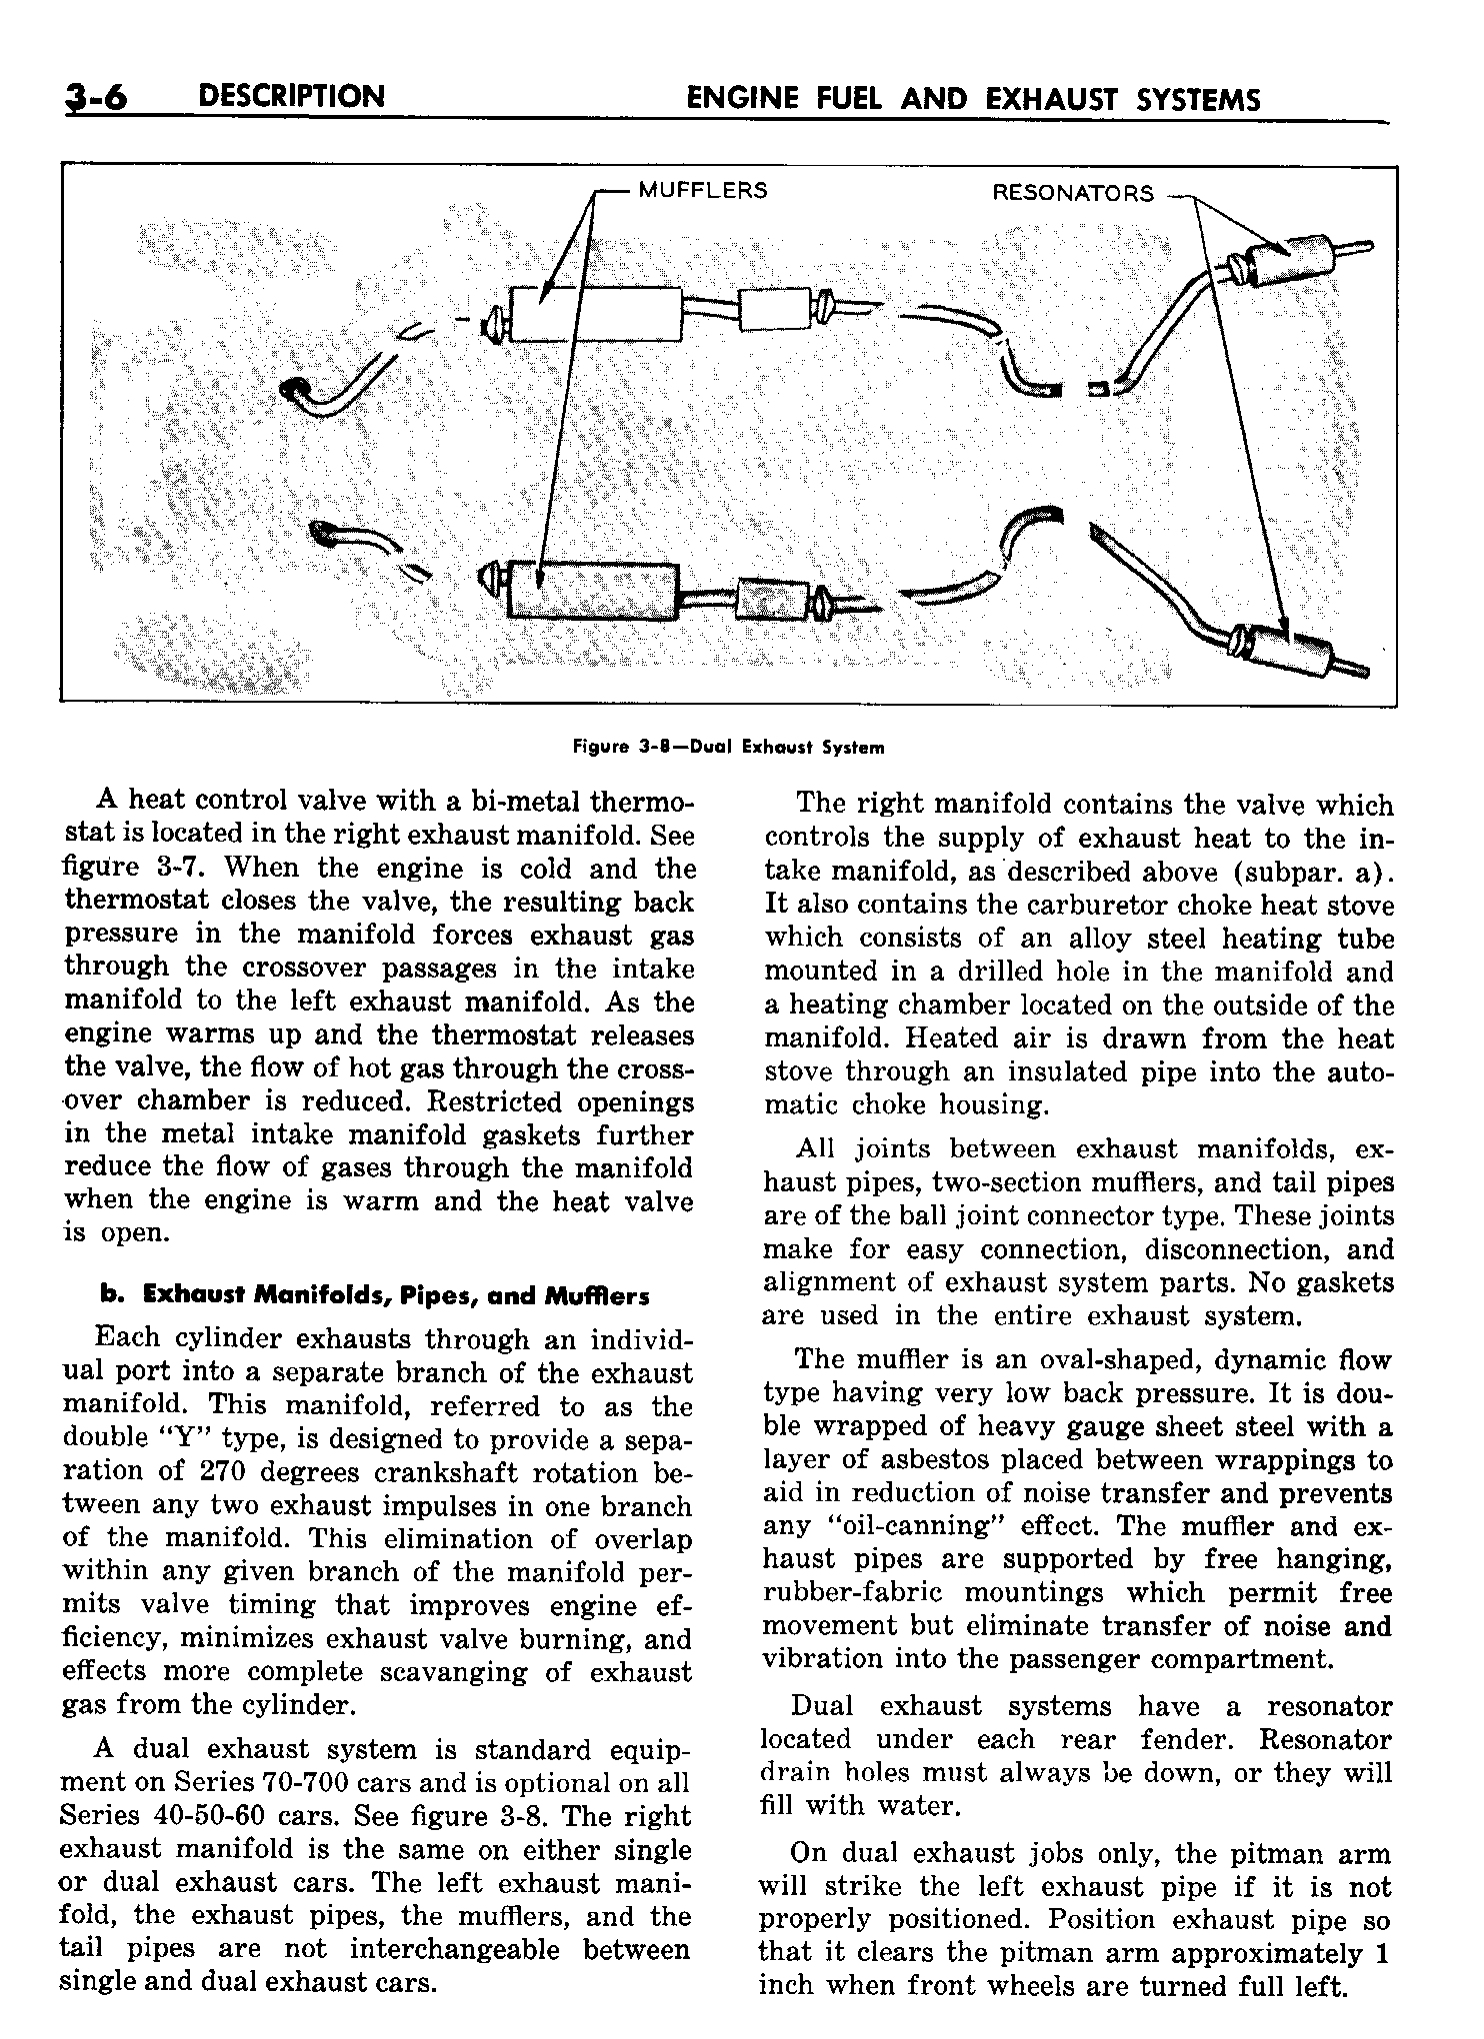 n_04 1958 Buick Shop Manual - Engine Fuel & Exhaust_6.jpg